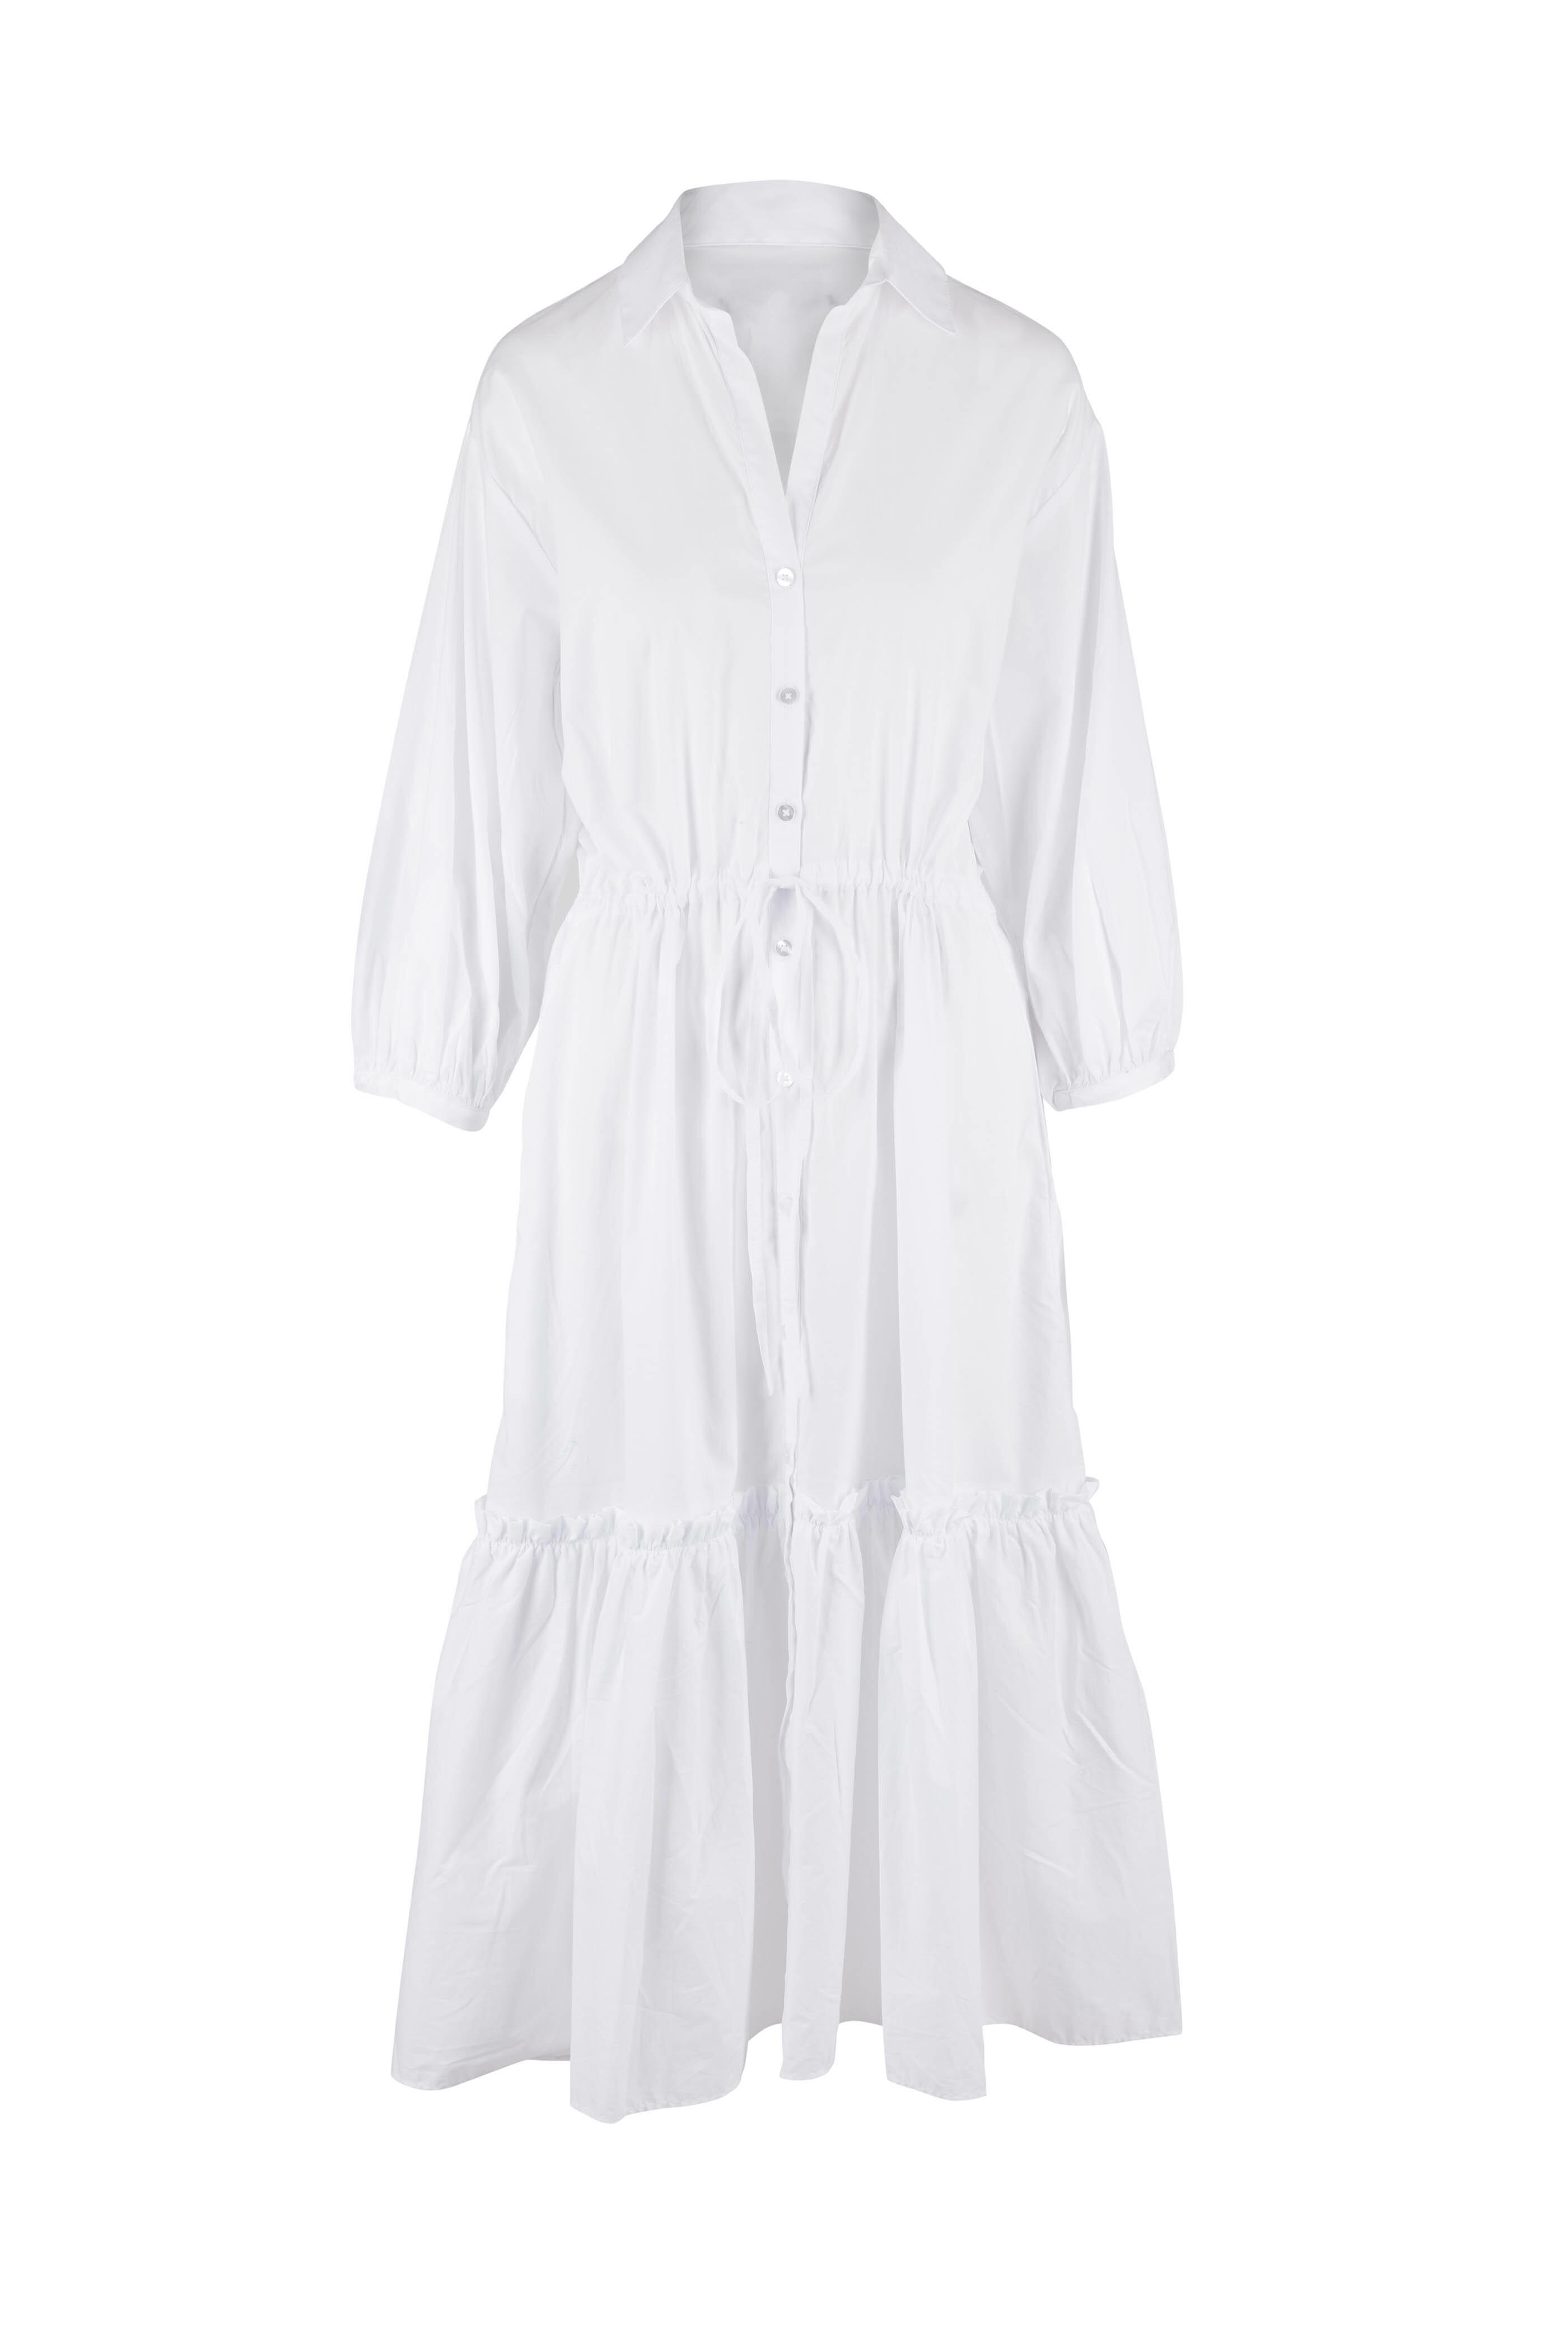 Cara Cara - Hutton White Cotton Tiered Dress | Mitchell Stores